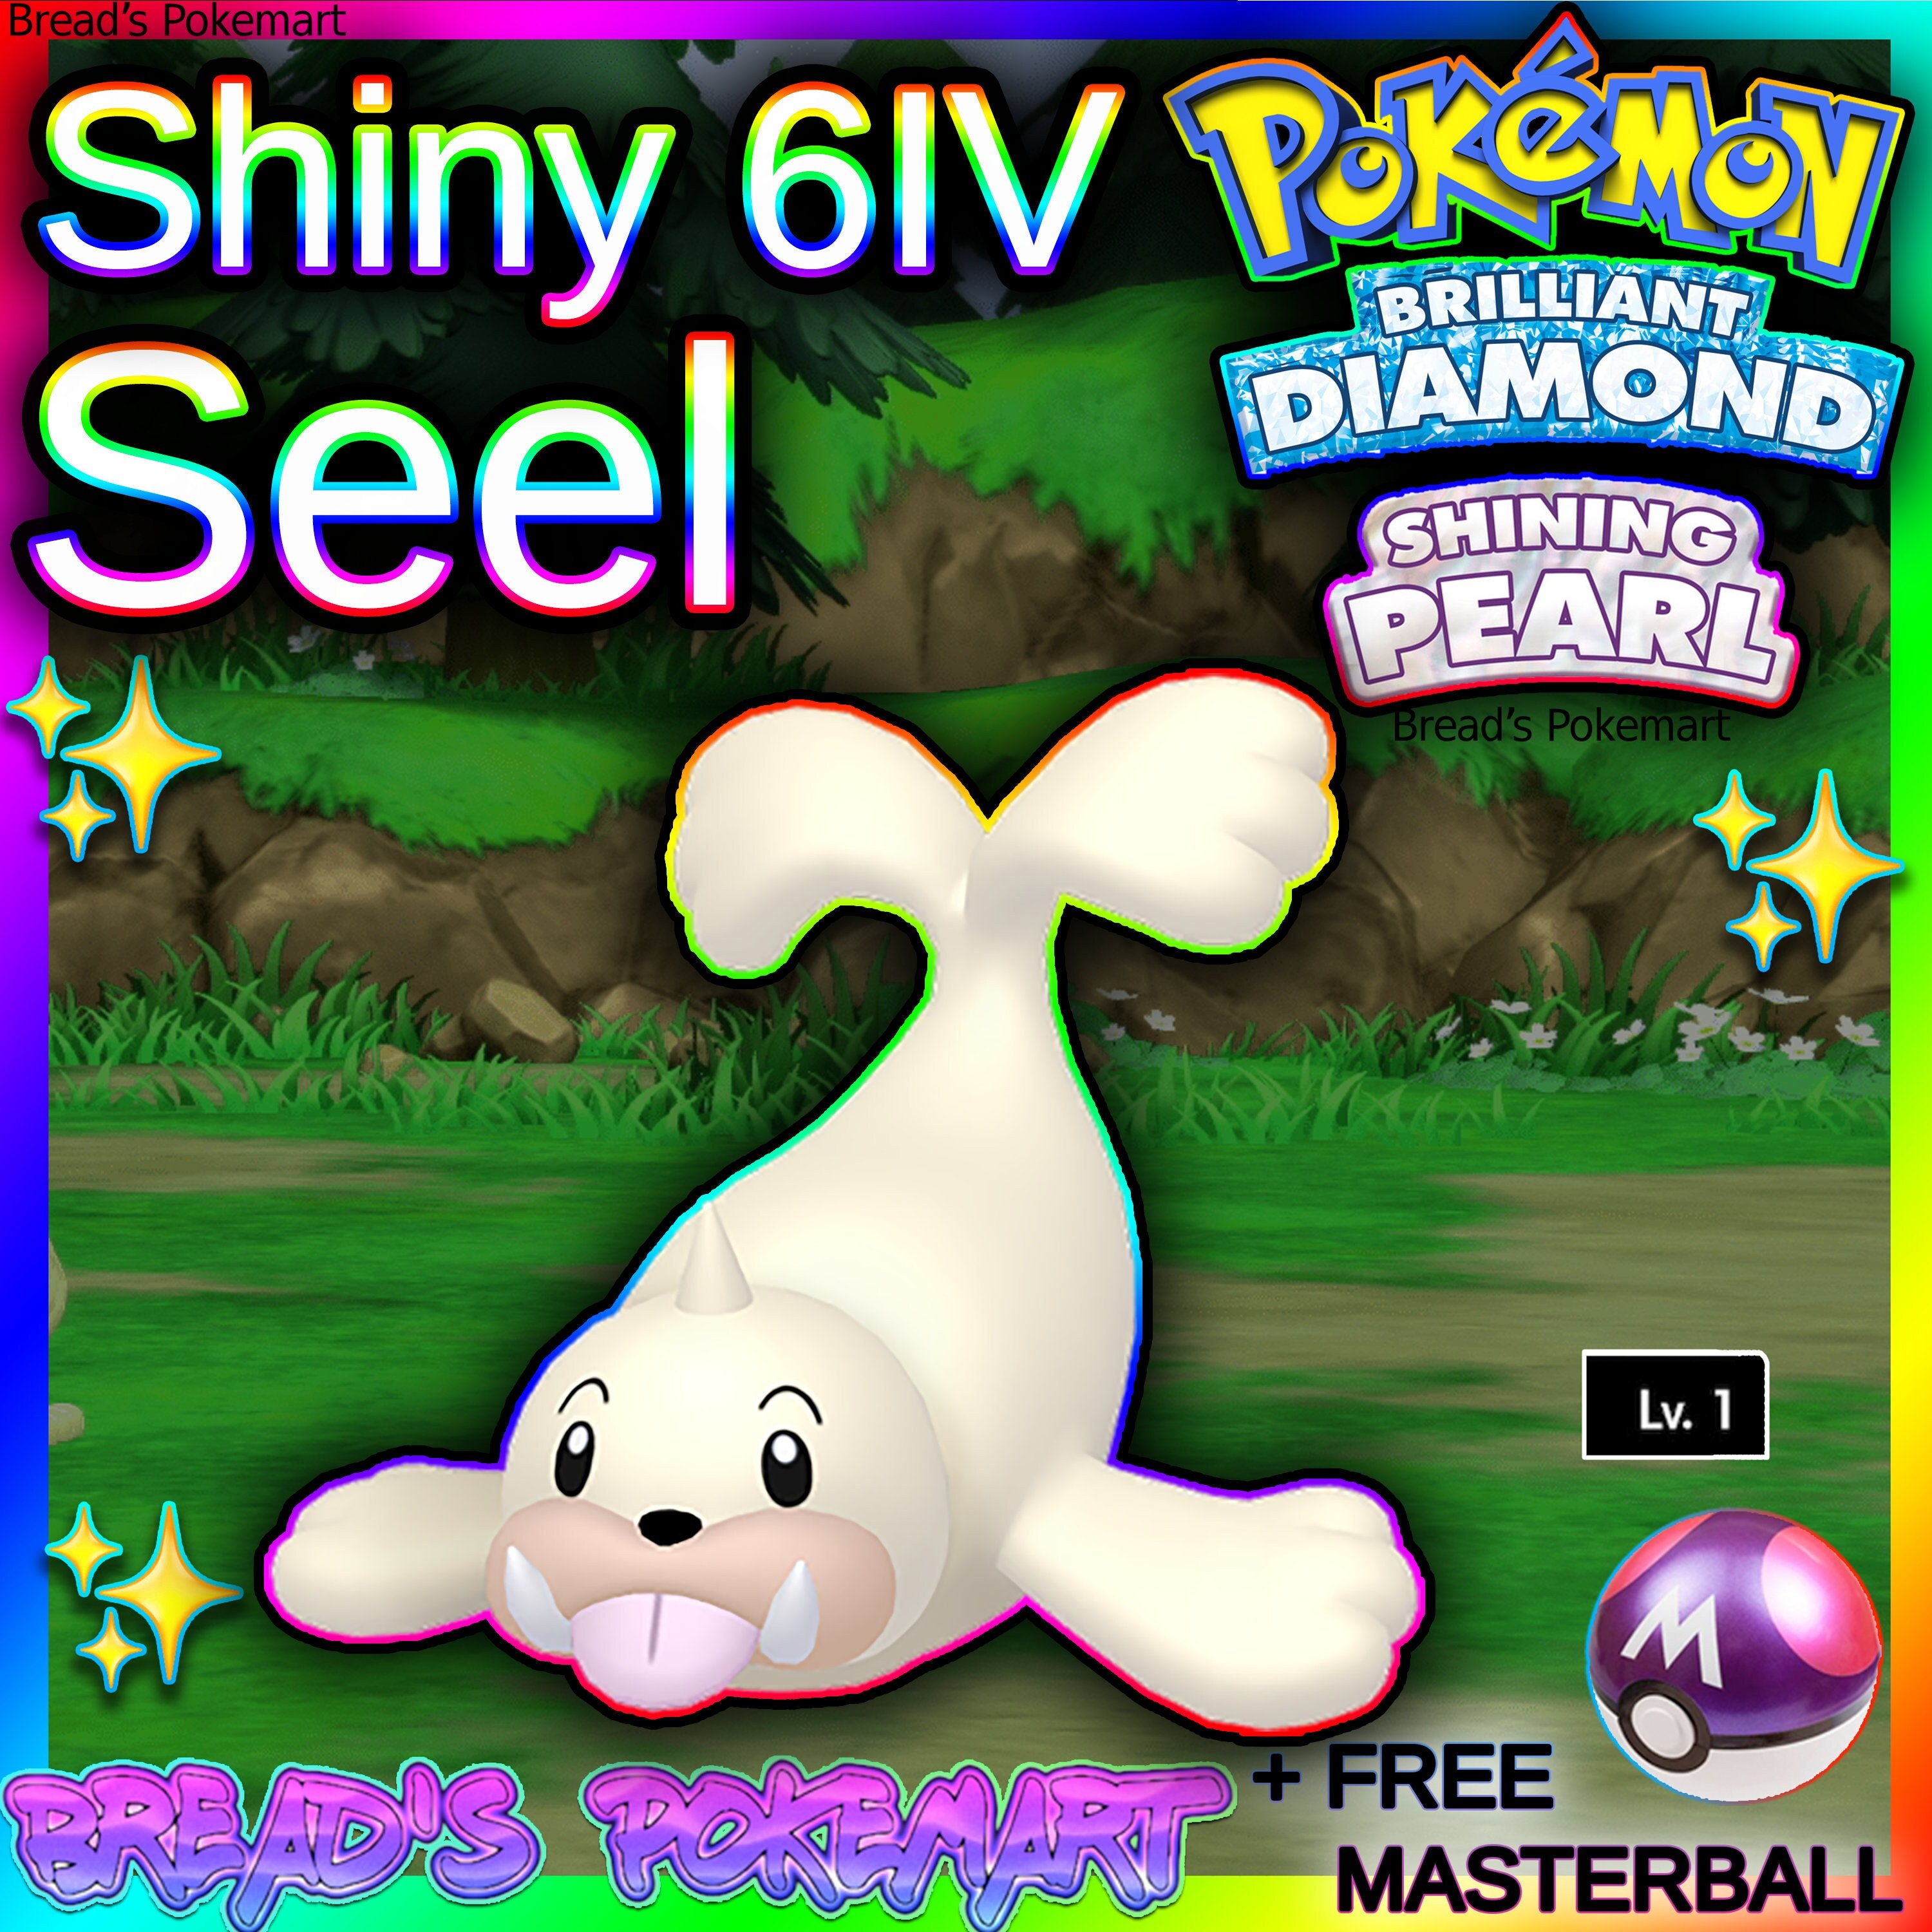 Shiny Gengar / Pokémon Brilliant Diamond and Shining Pearl / 6IV